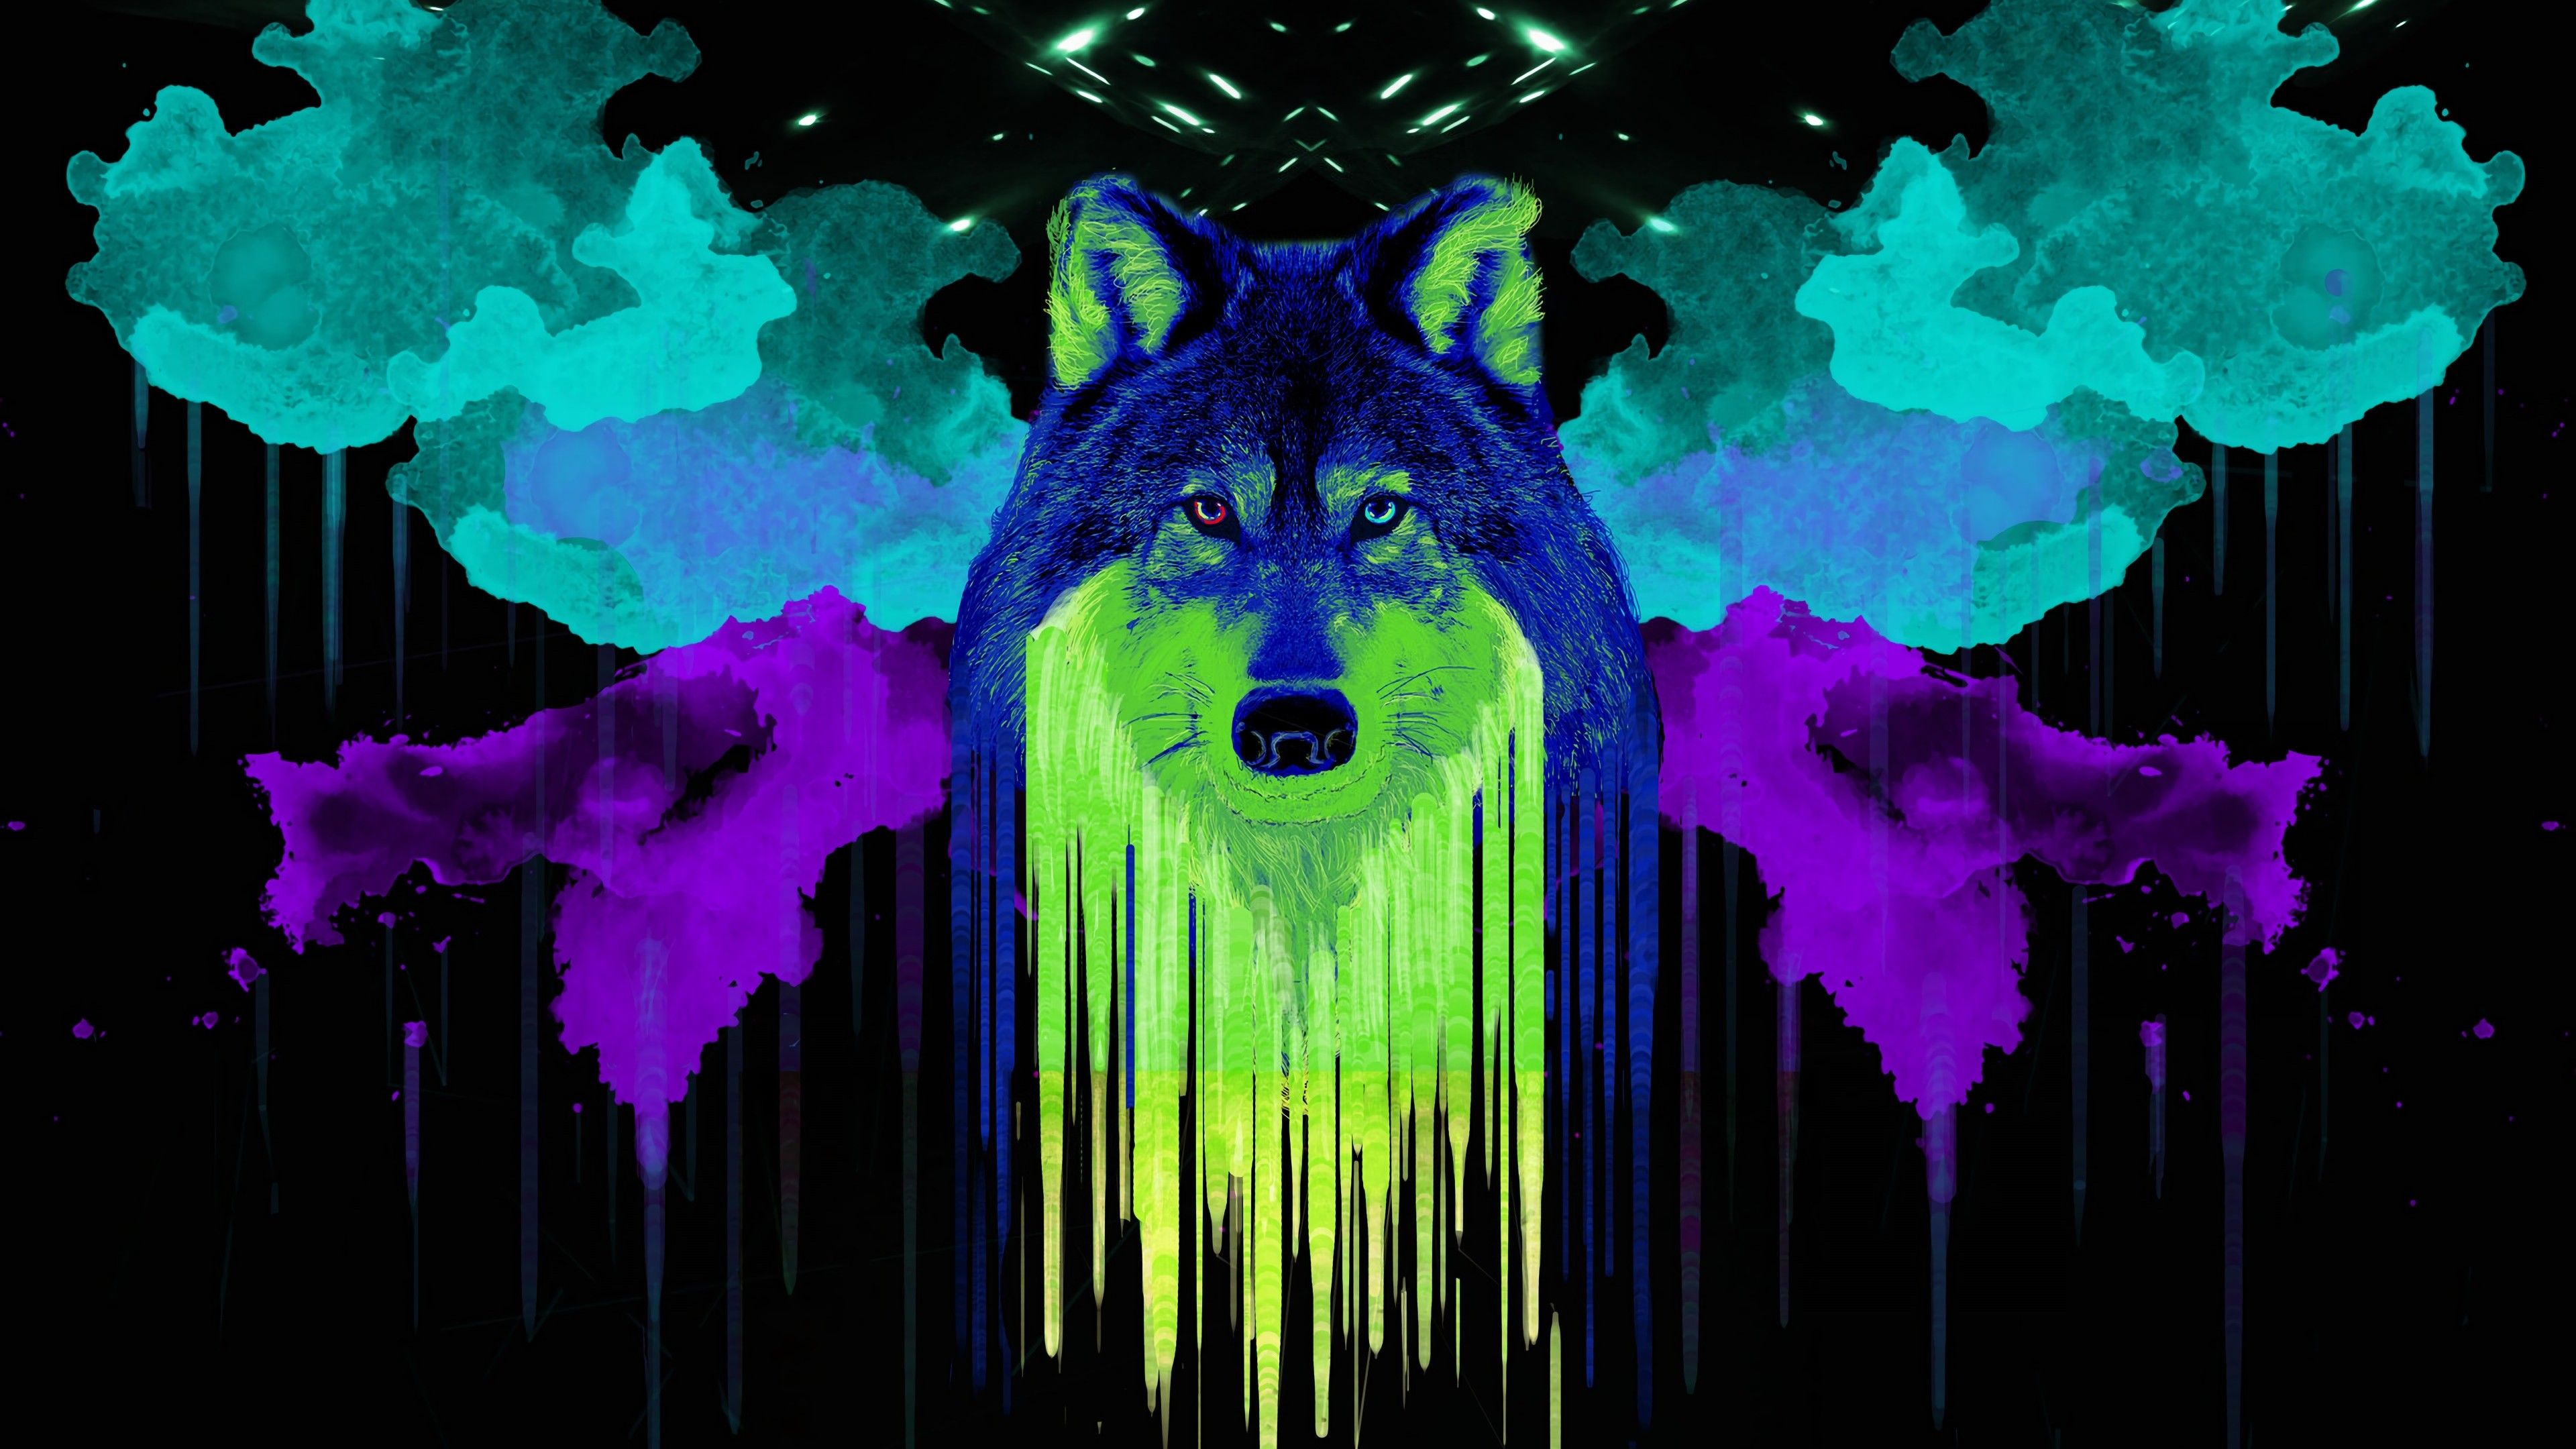 Wolf 4K Wallpaper, Artwork, Neon, Black background, Watercolors, Painting, Graphics CGI